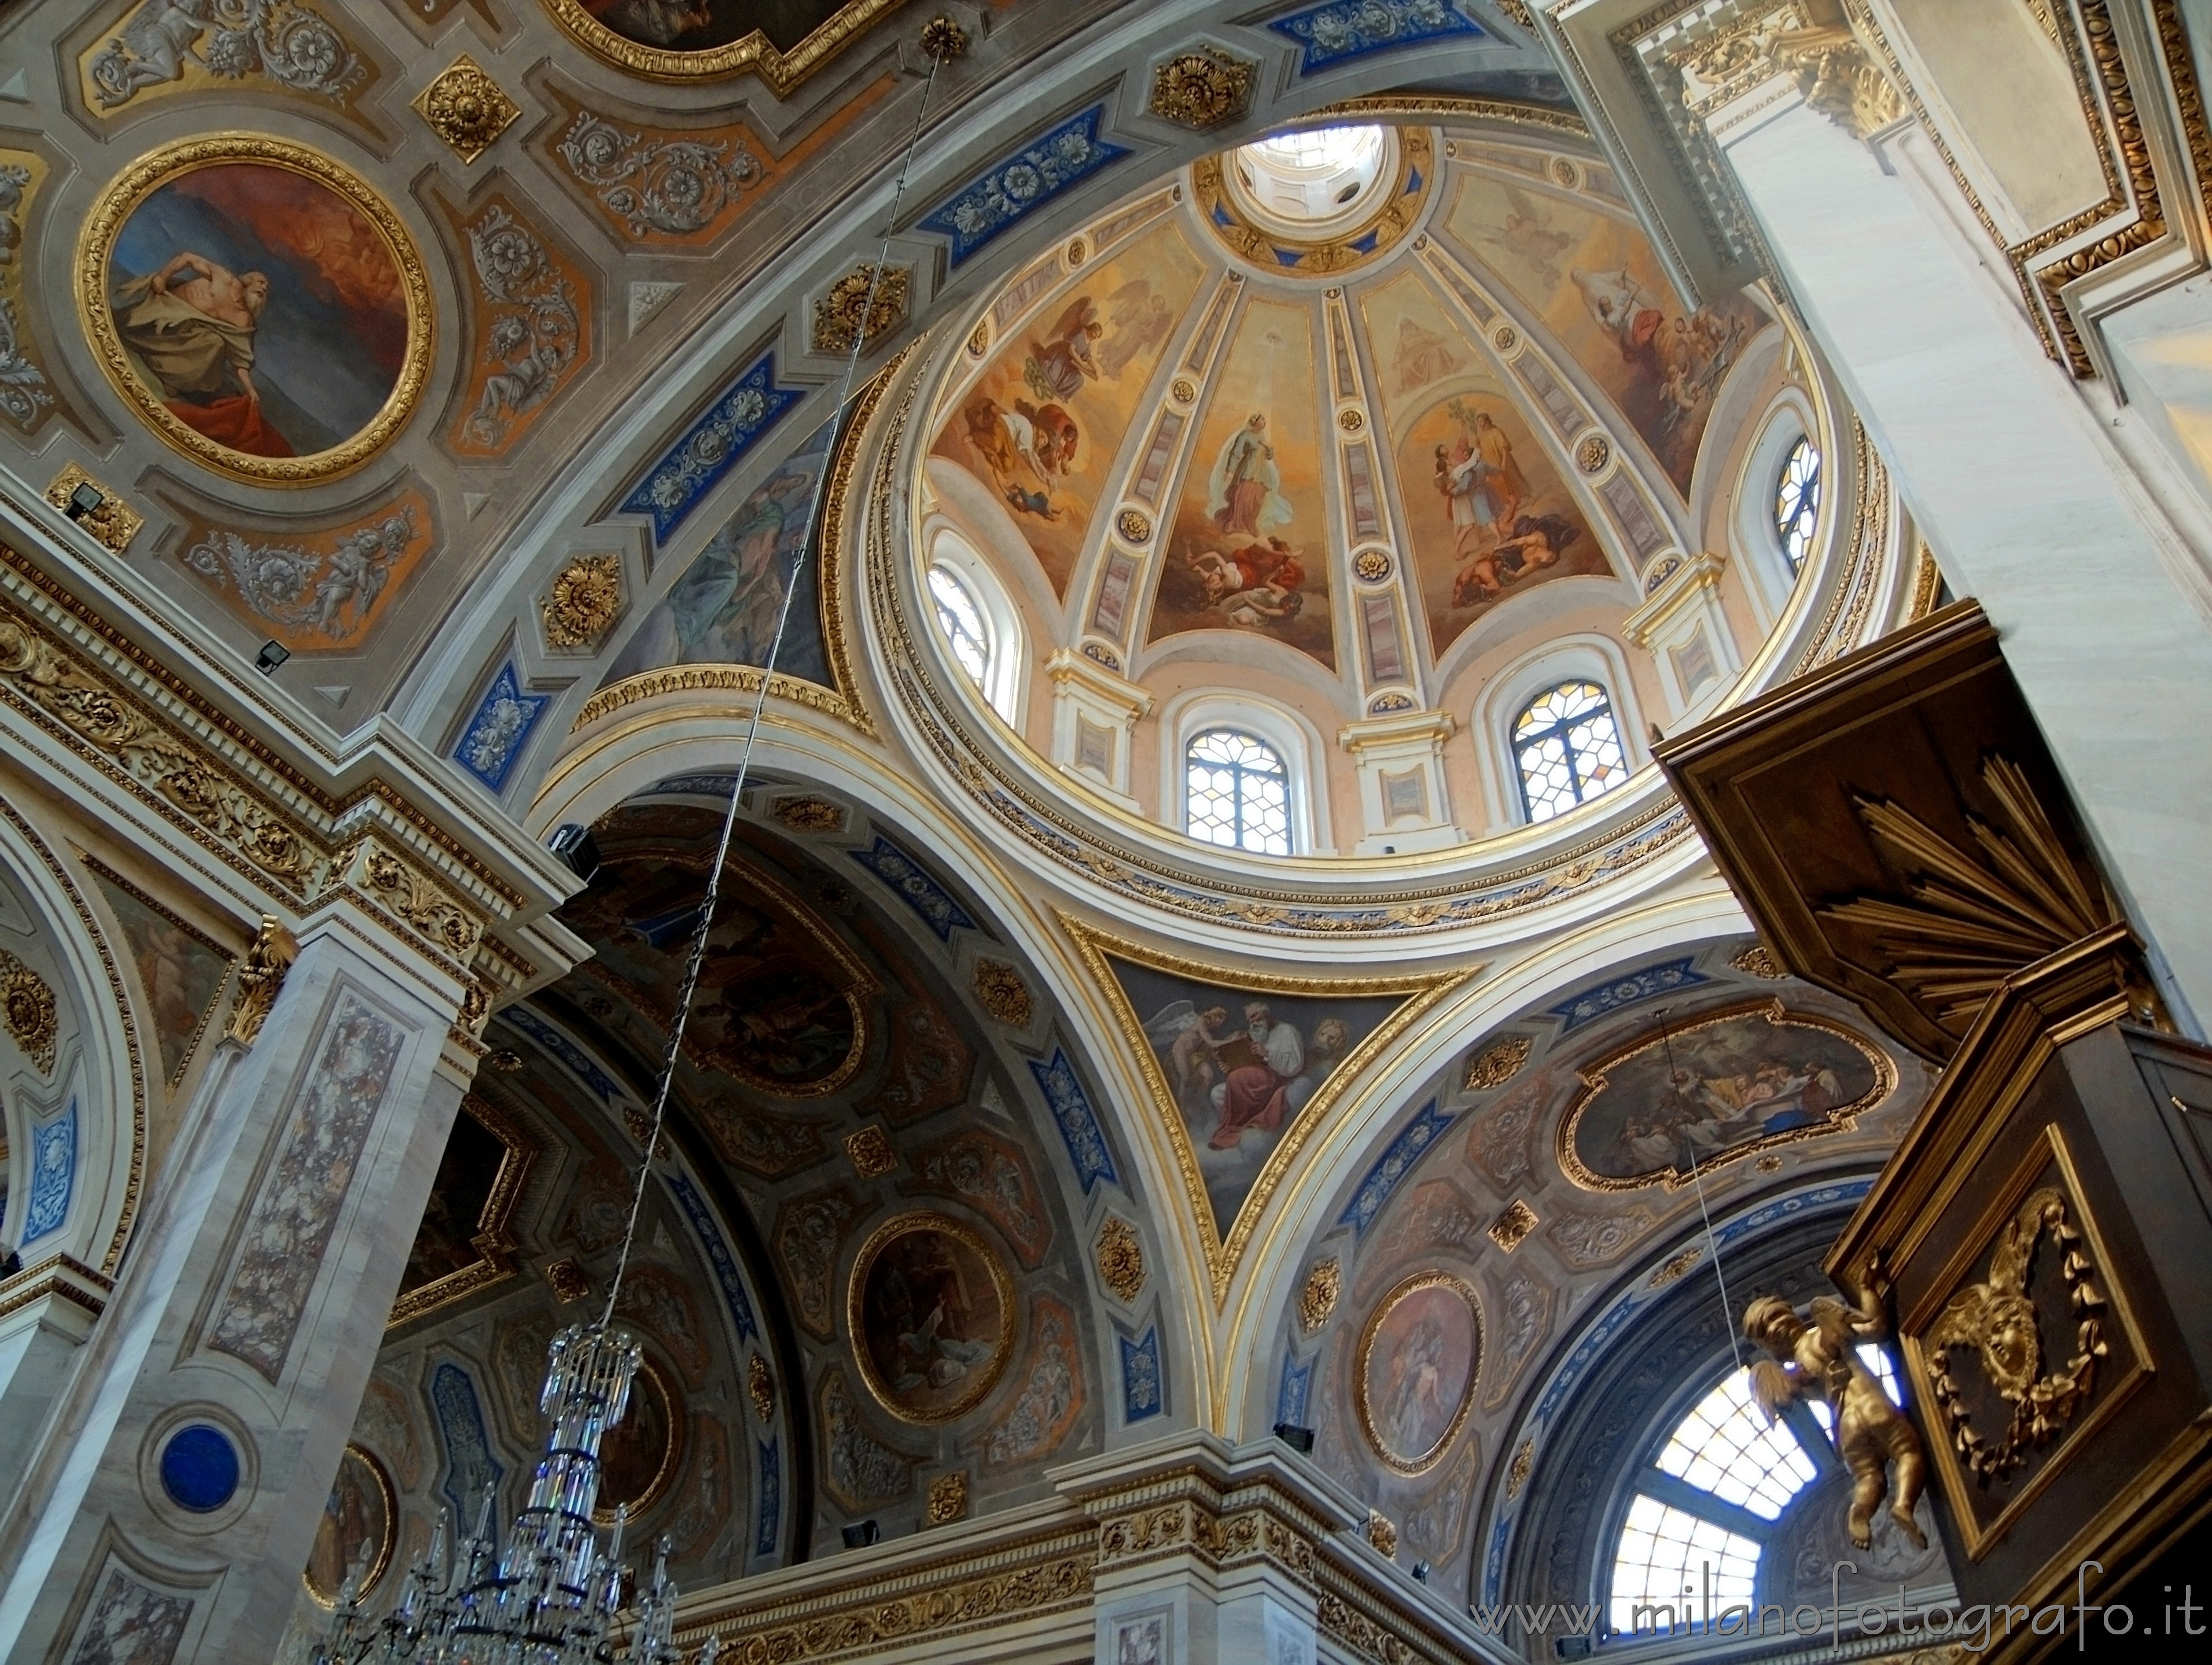 Vigevano (Pavia, Italy): Detail of the interiors of the Duomo - Vigevano (Pavia, Italy)